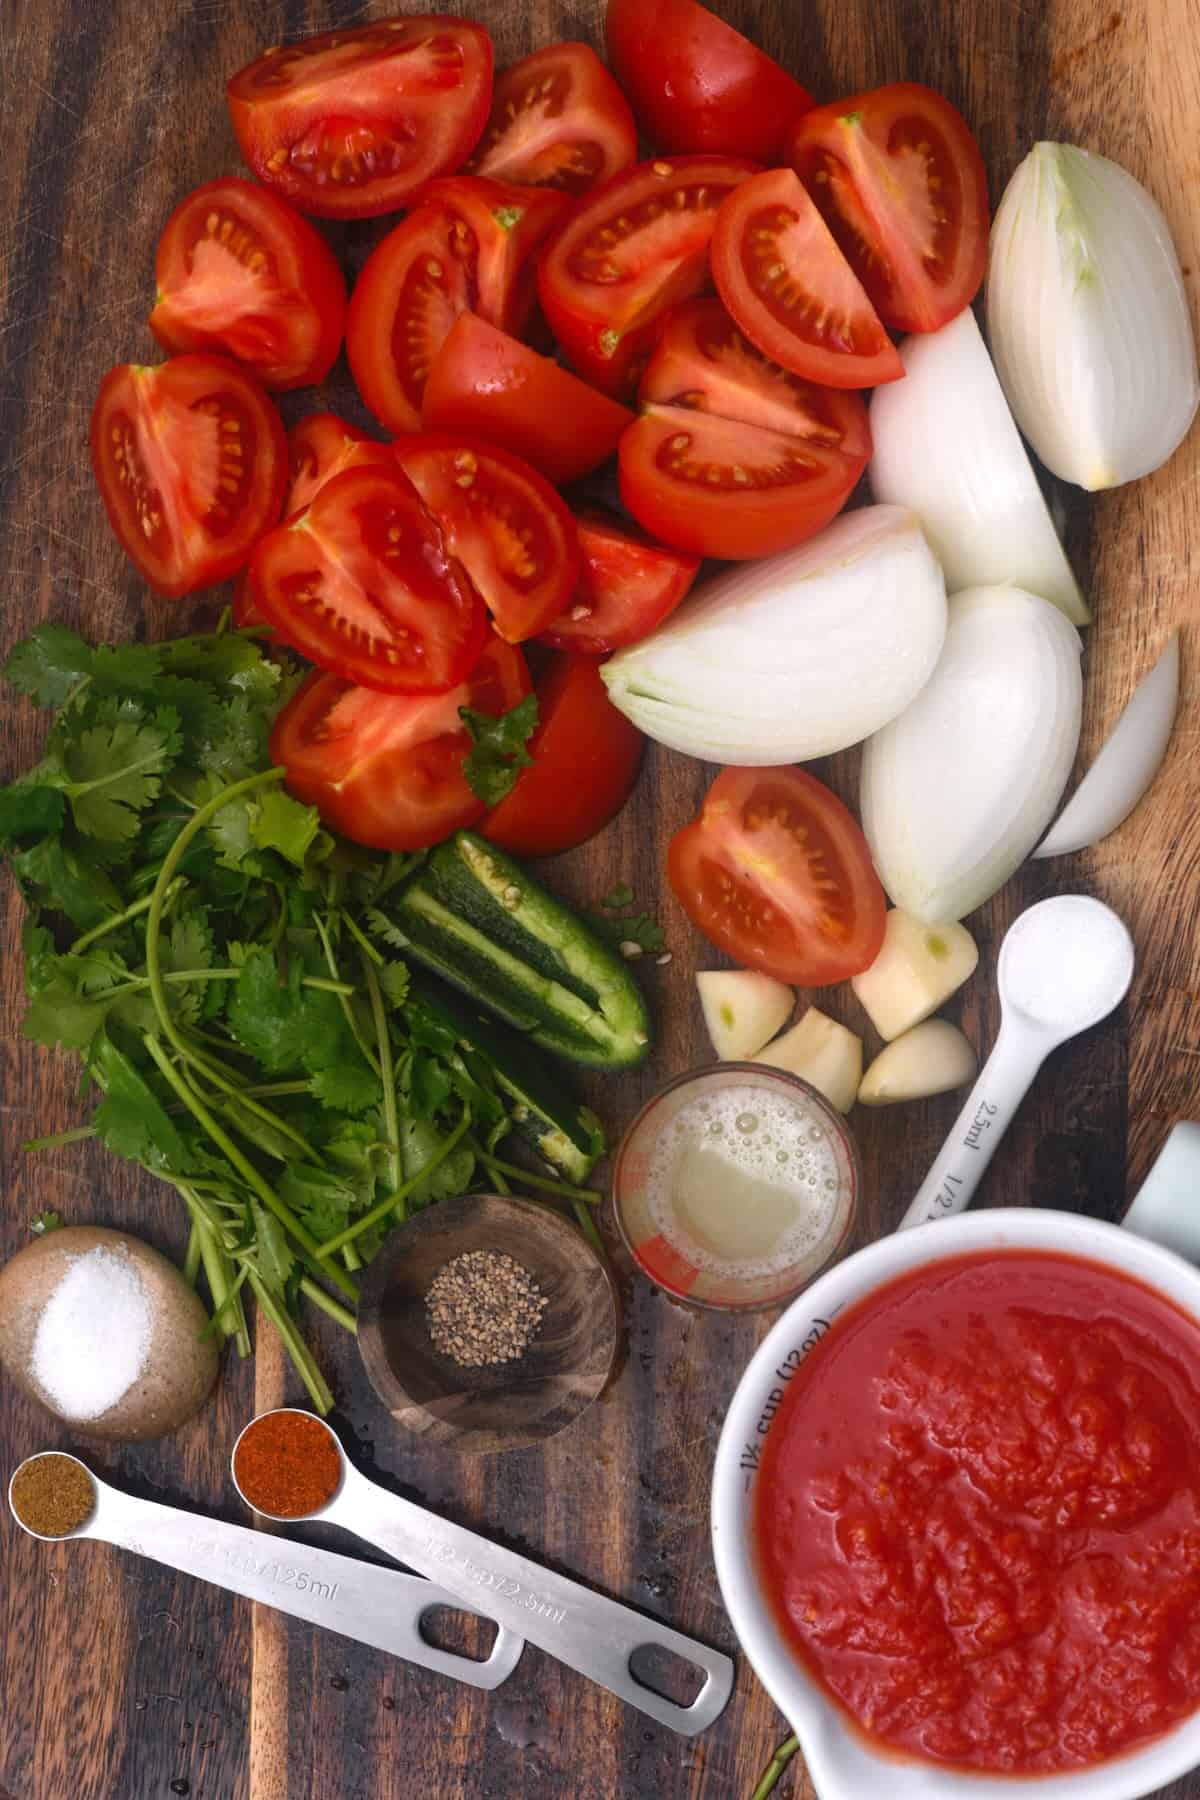 Prepared vegetables for making salsa